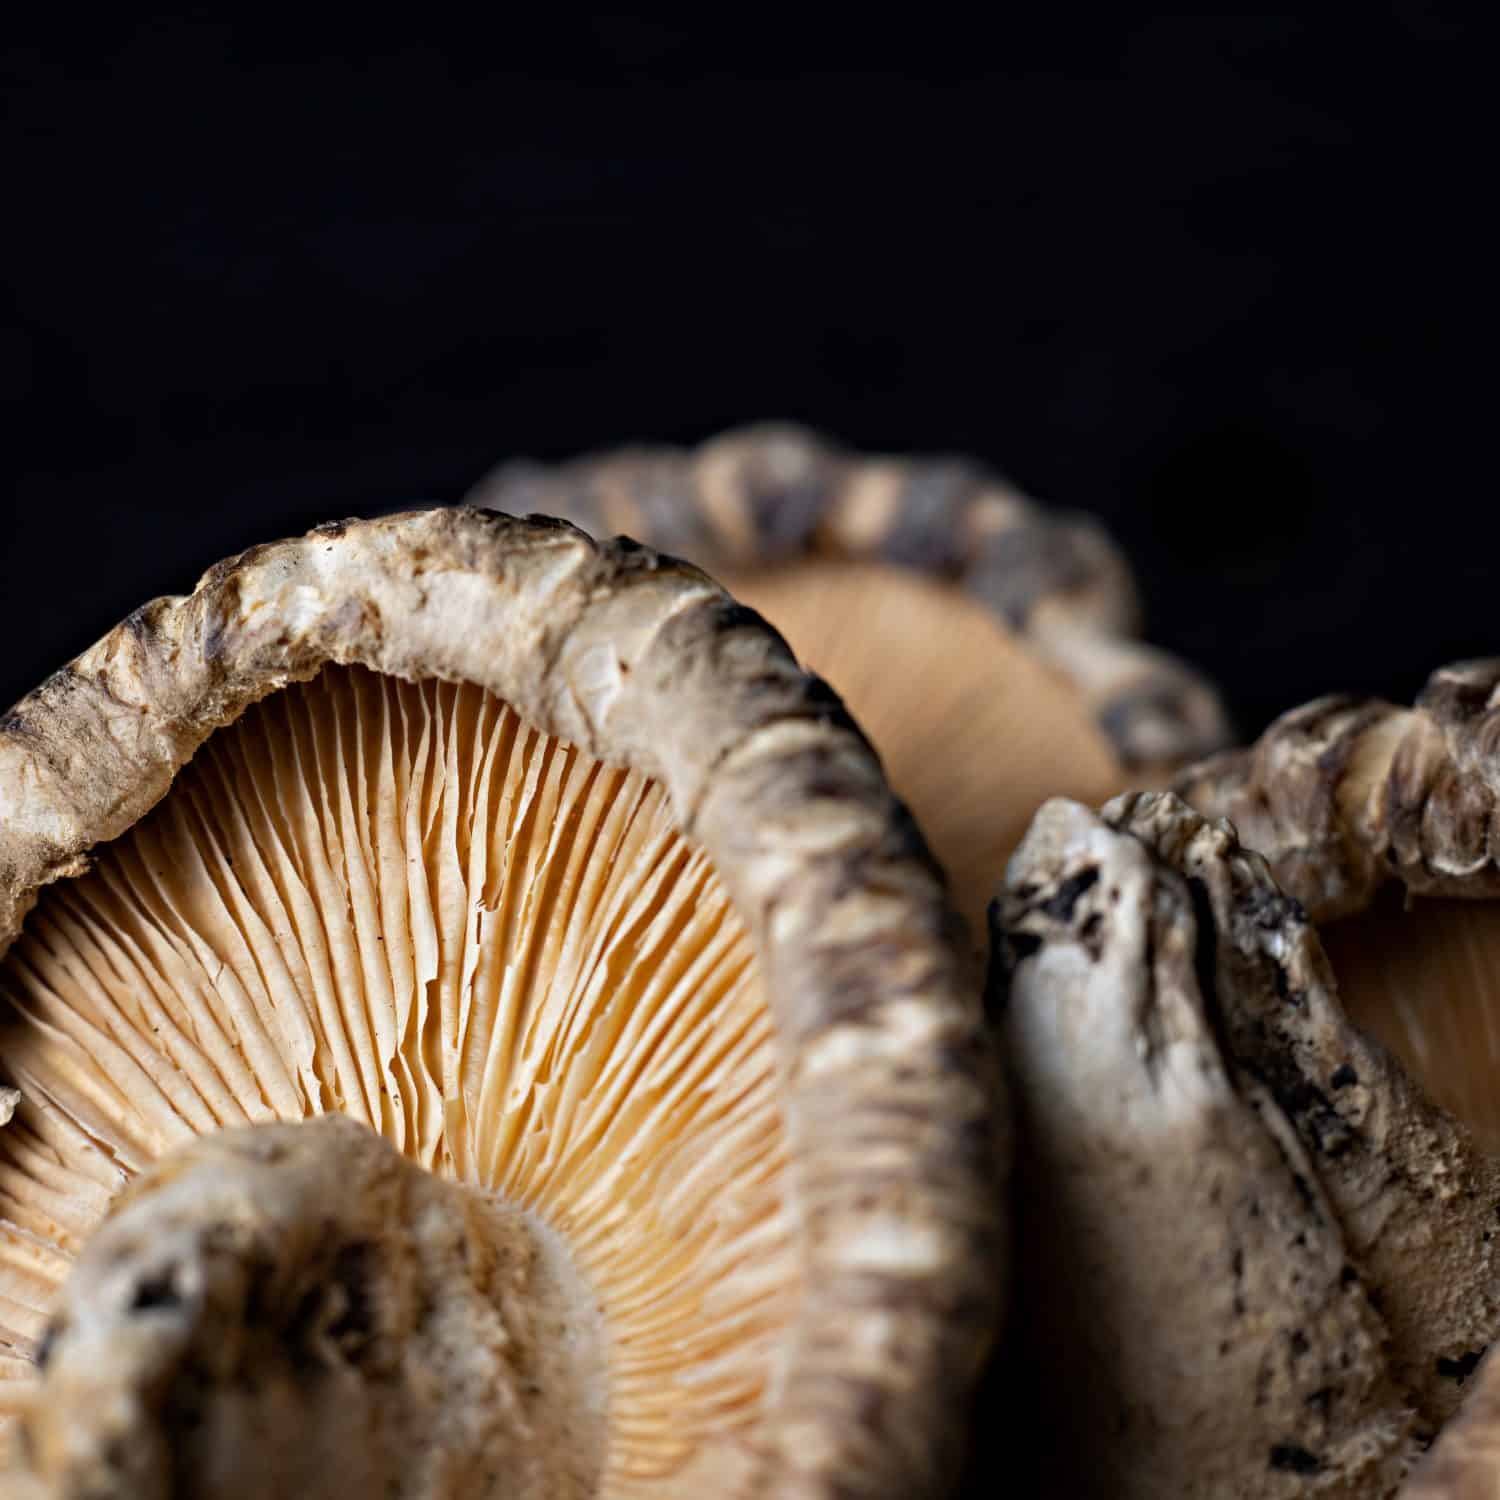 Dried Shiitake Mushroom Gills Close up.